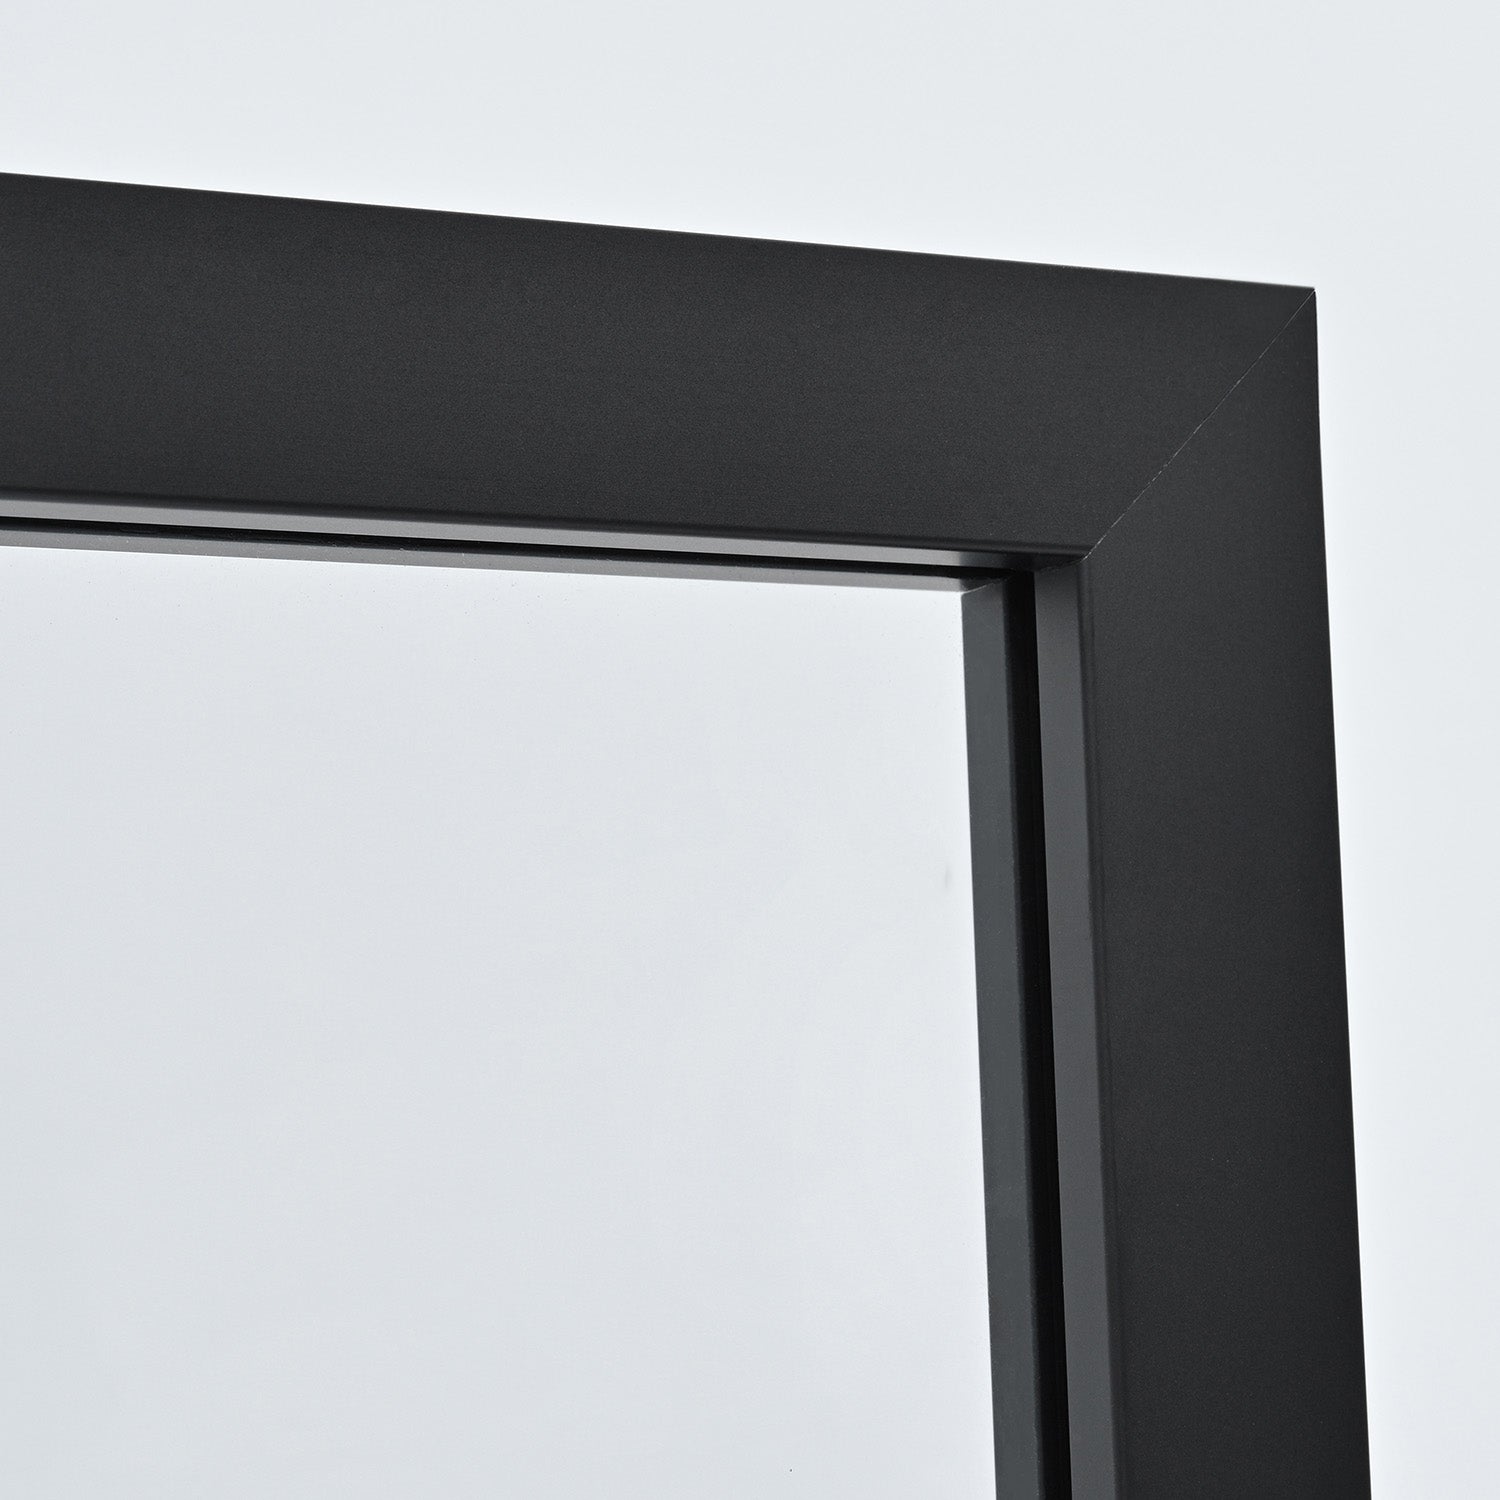 Azpeitia 34" W x 74" H Framed Fixed Glass Panel in Matte Black